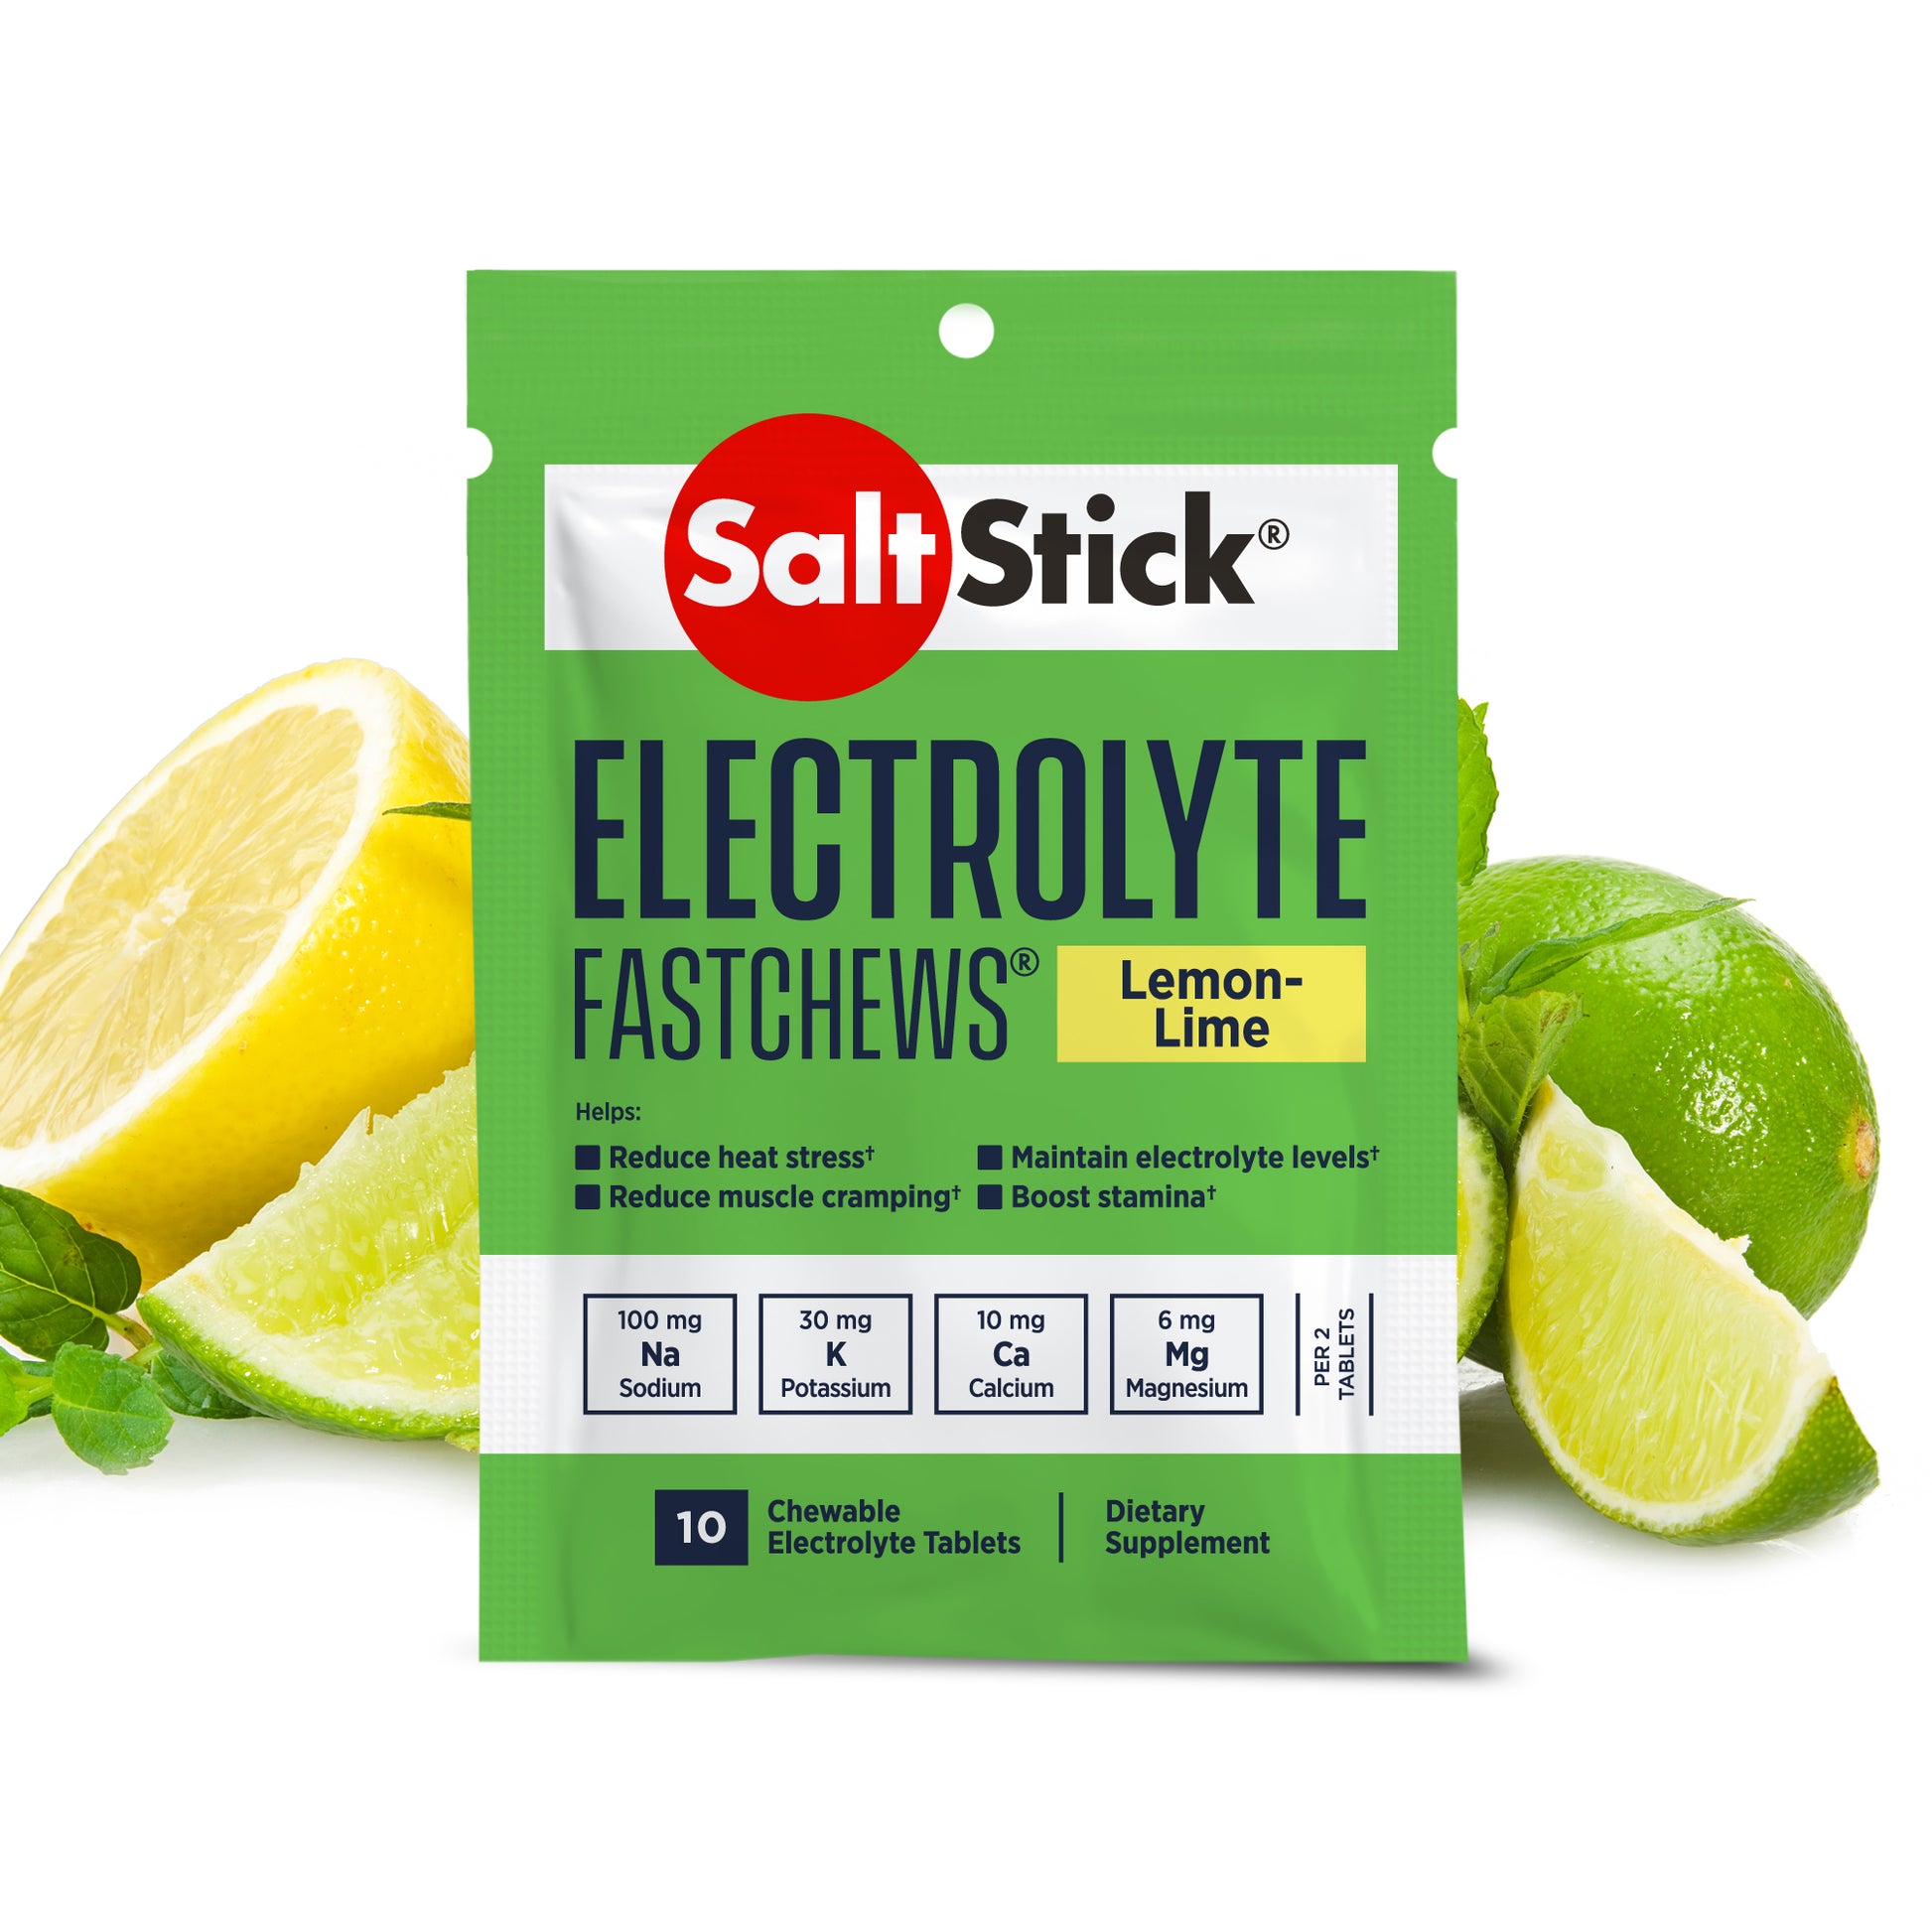 SaltStick FastChews Chewable Electrolyte Tablets Lemon-Lime Packet of 10